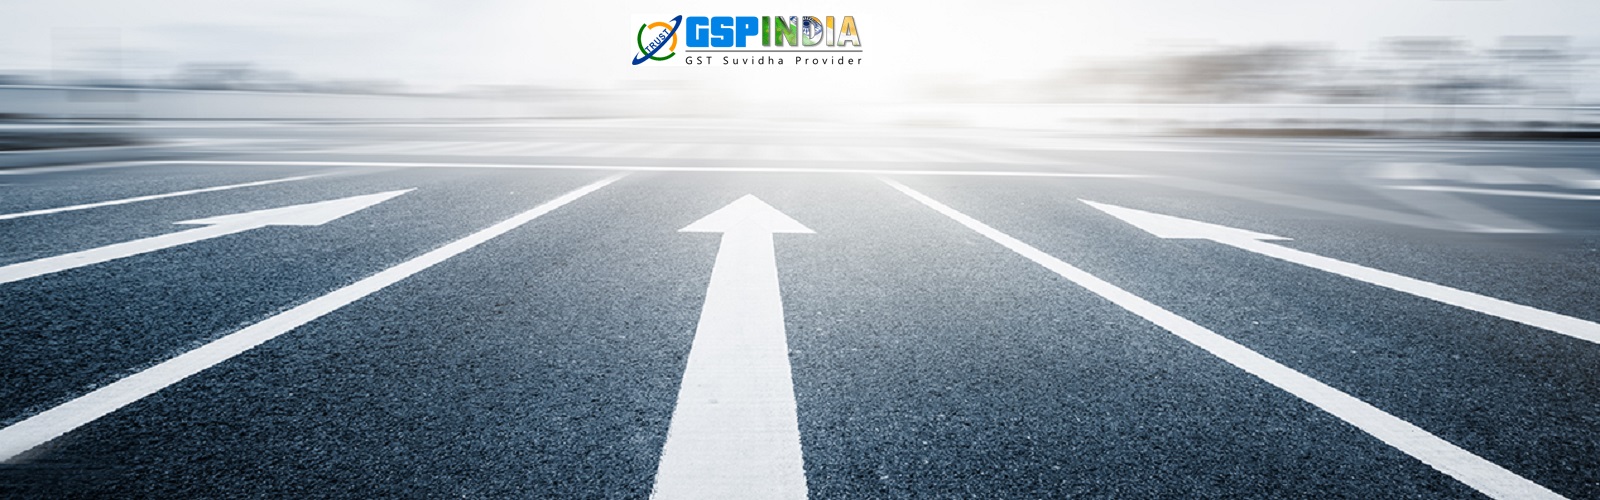 GSPIndia - GST Suvidha Provider